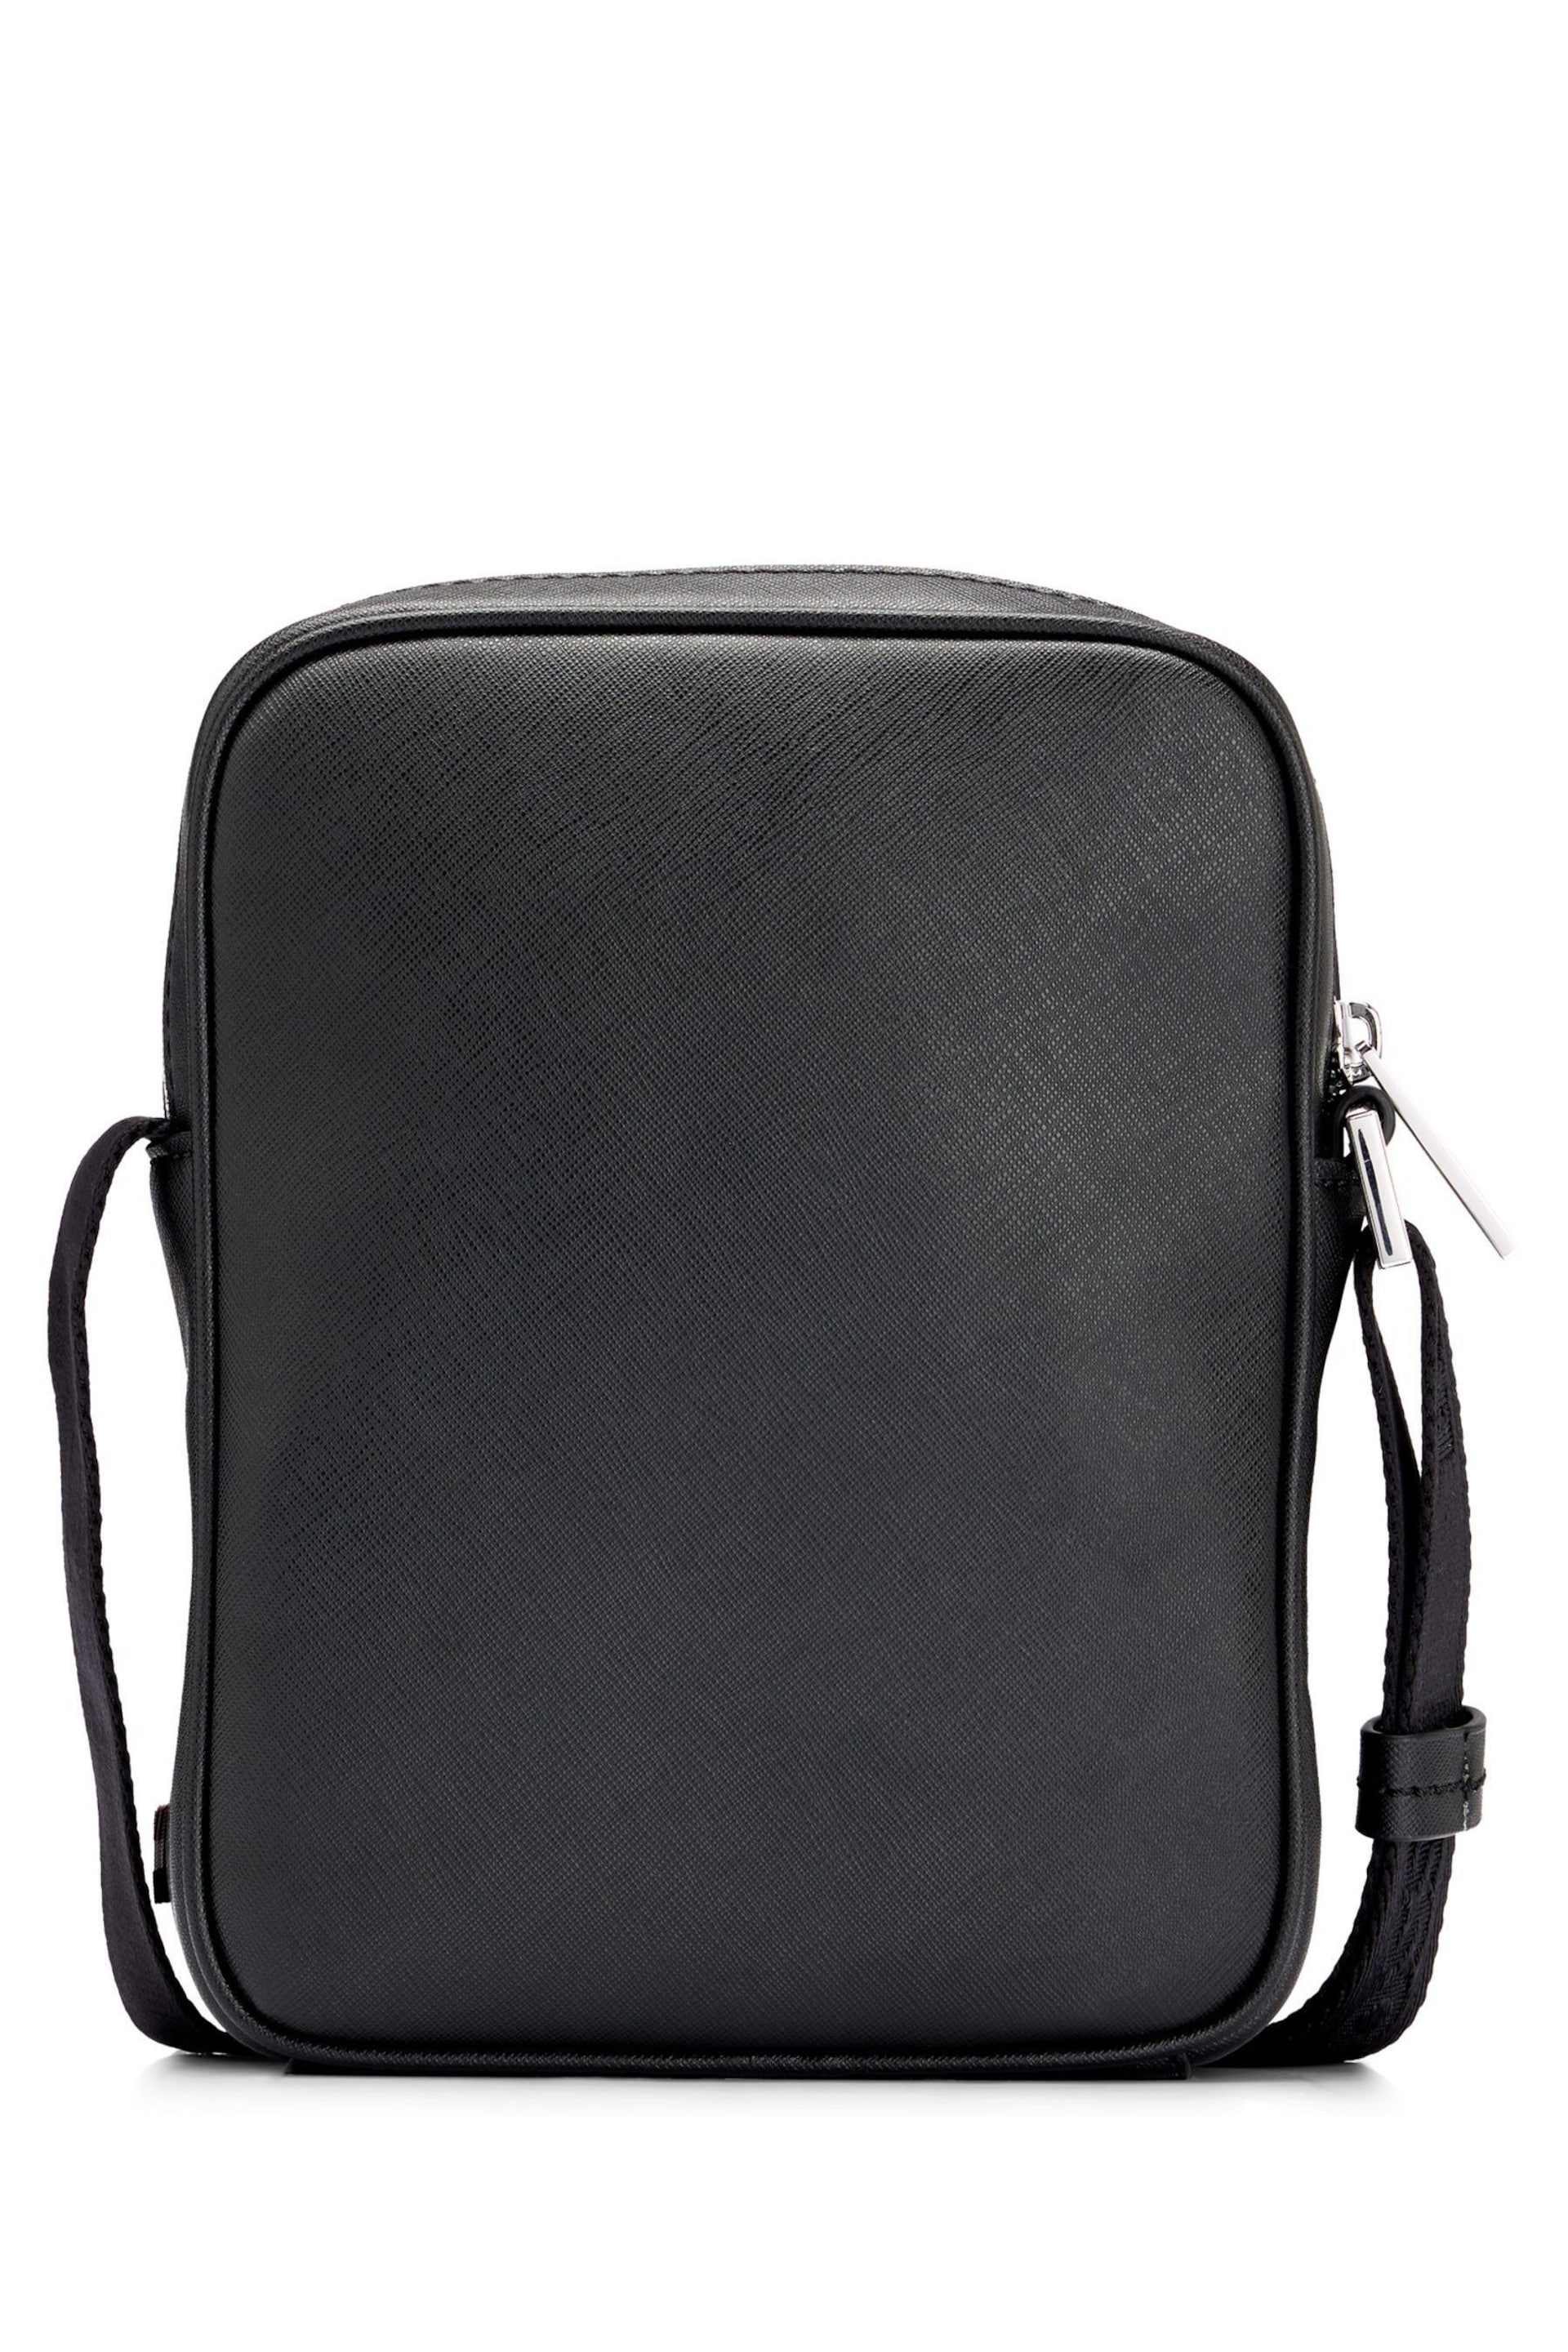 BOSS Black Leather Logo Reporting Bag - Image 5 of 8